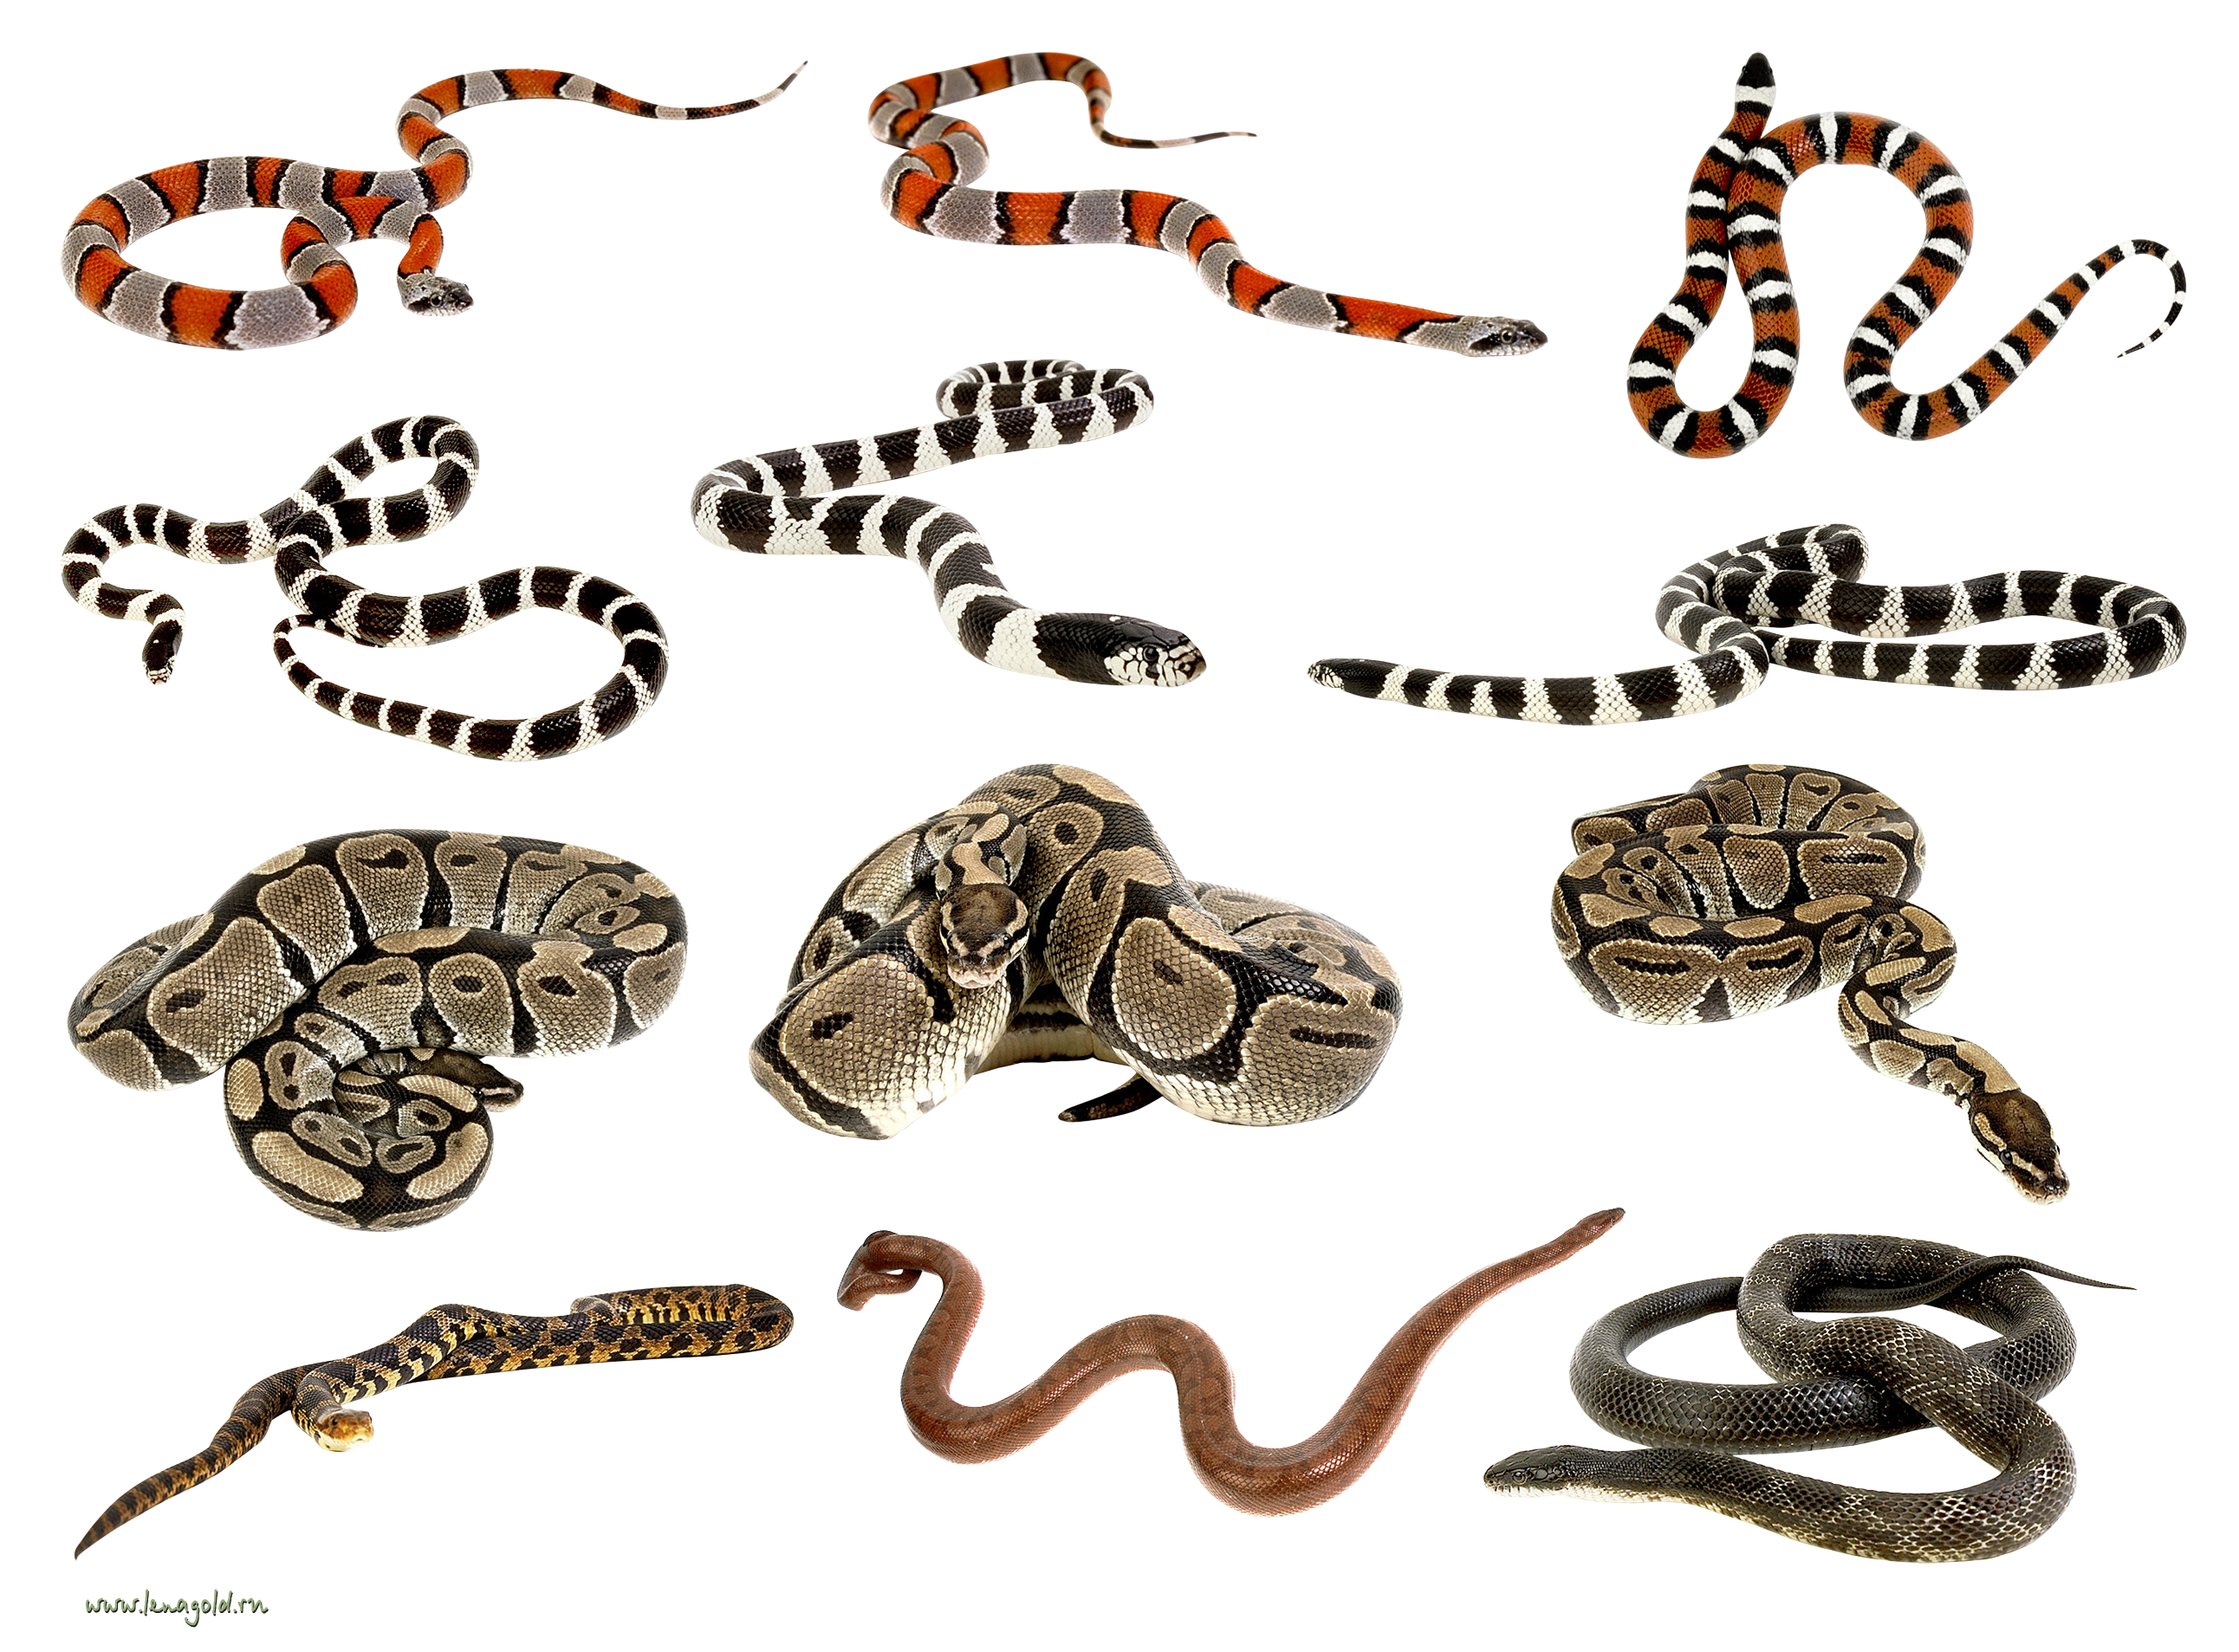 Beberapa ular bersama-sama